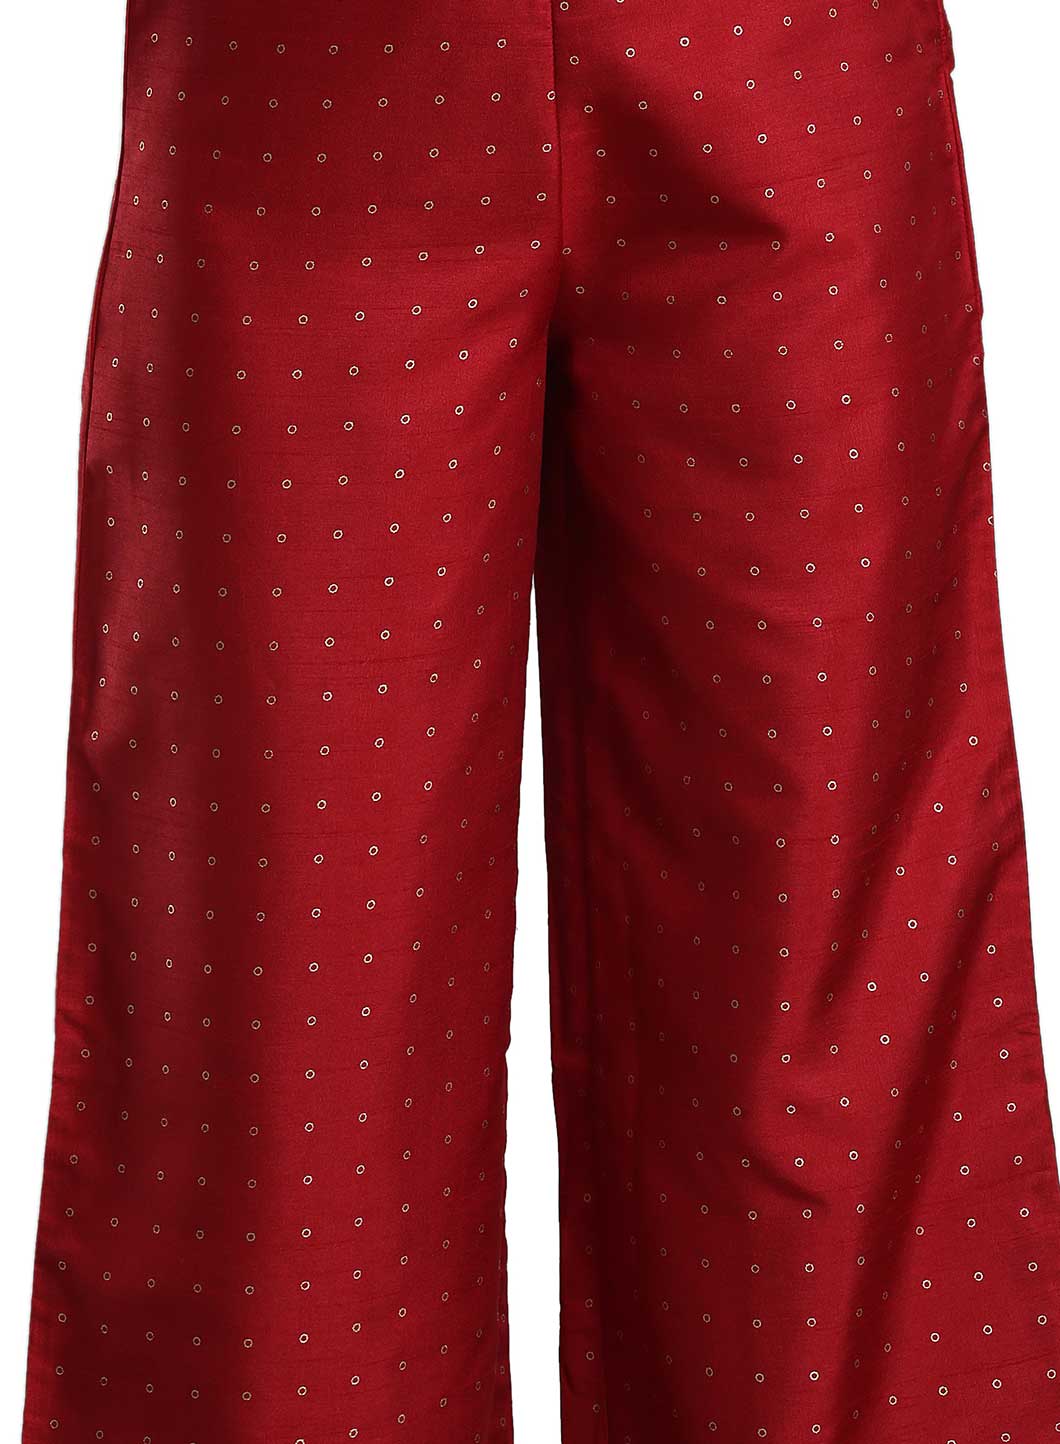 Red Parallel Printed Pants